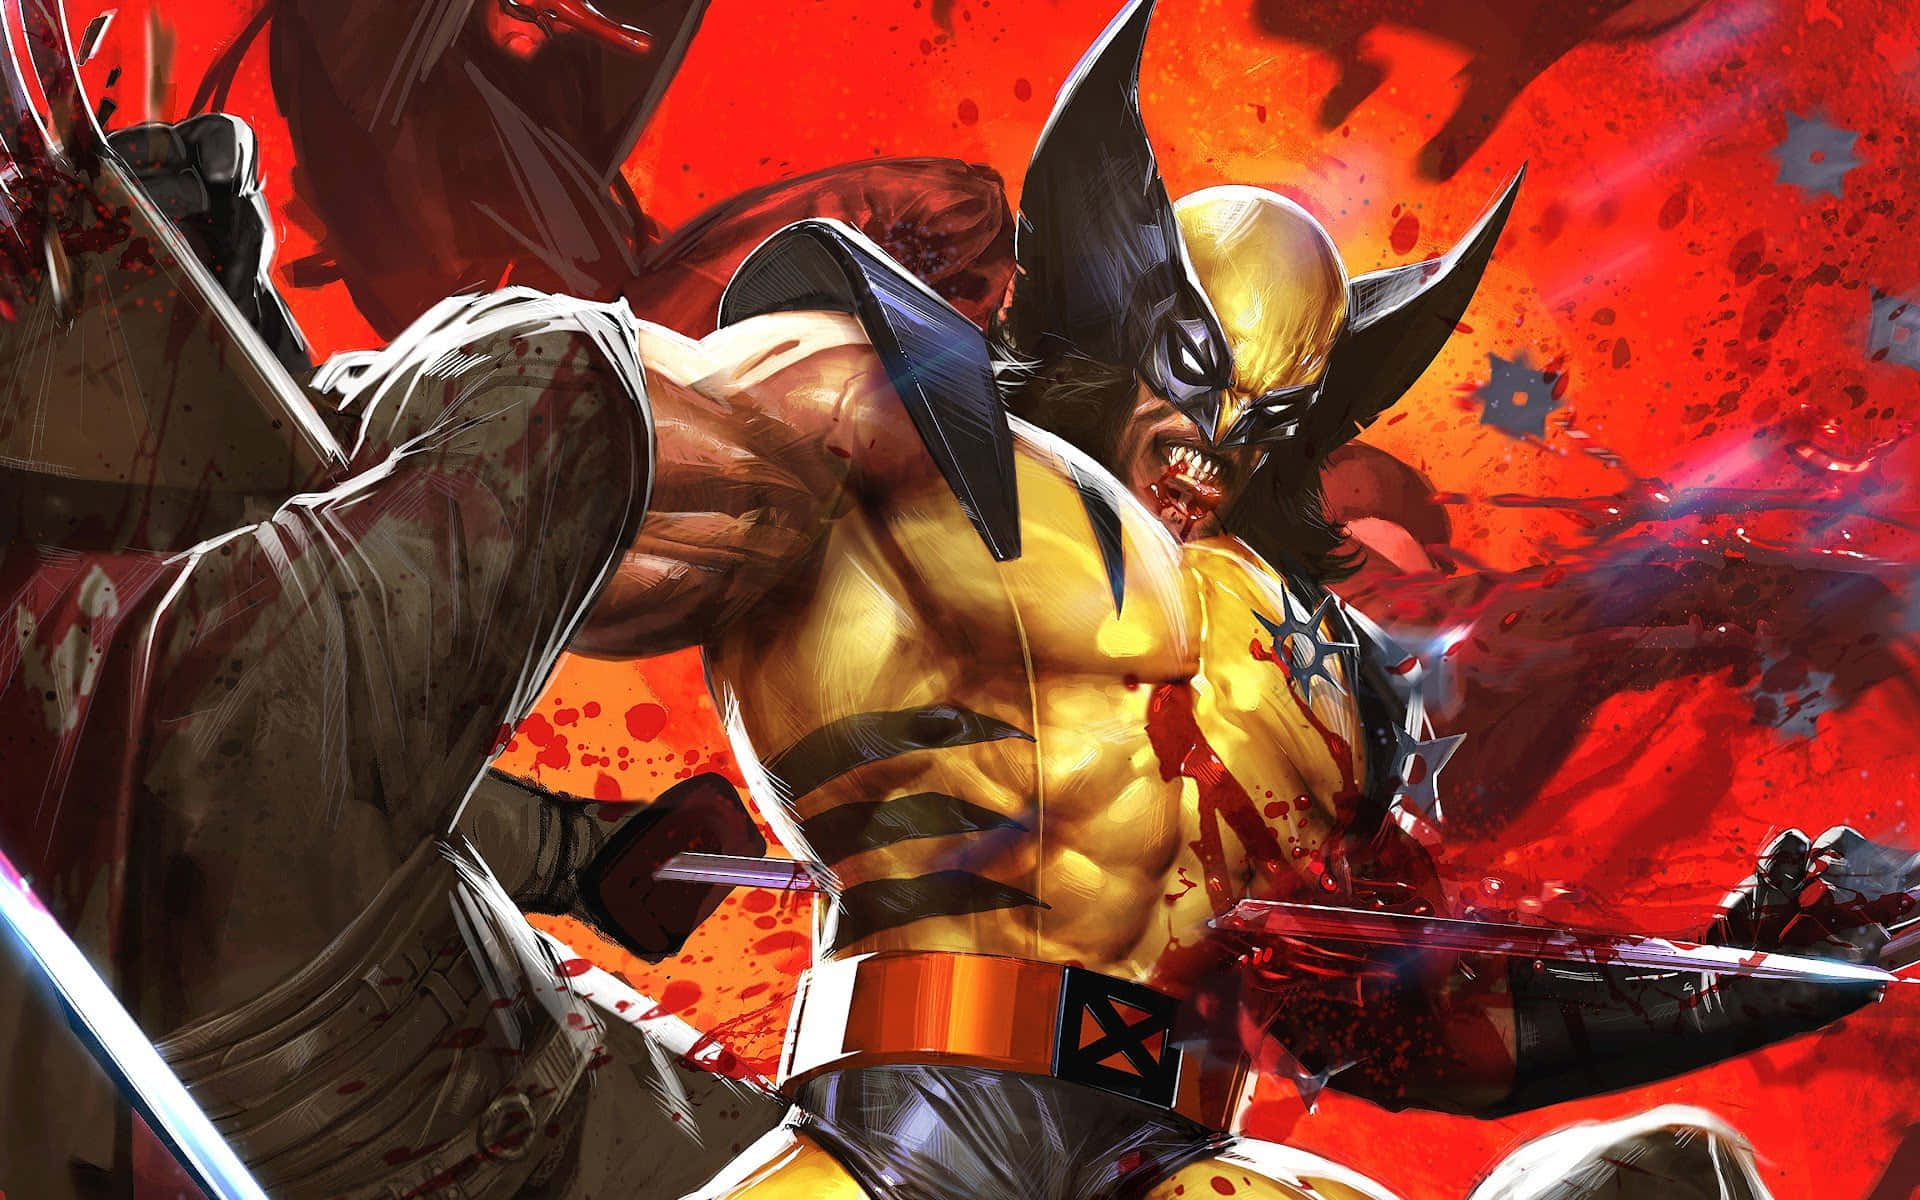 Wolverine, the powerful mutant